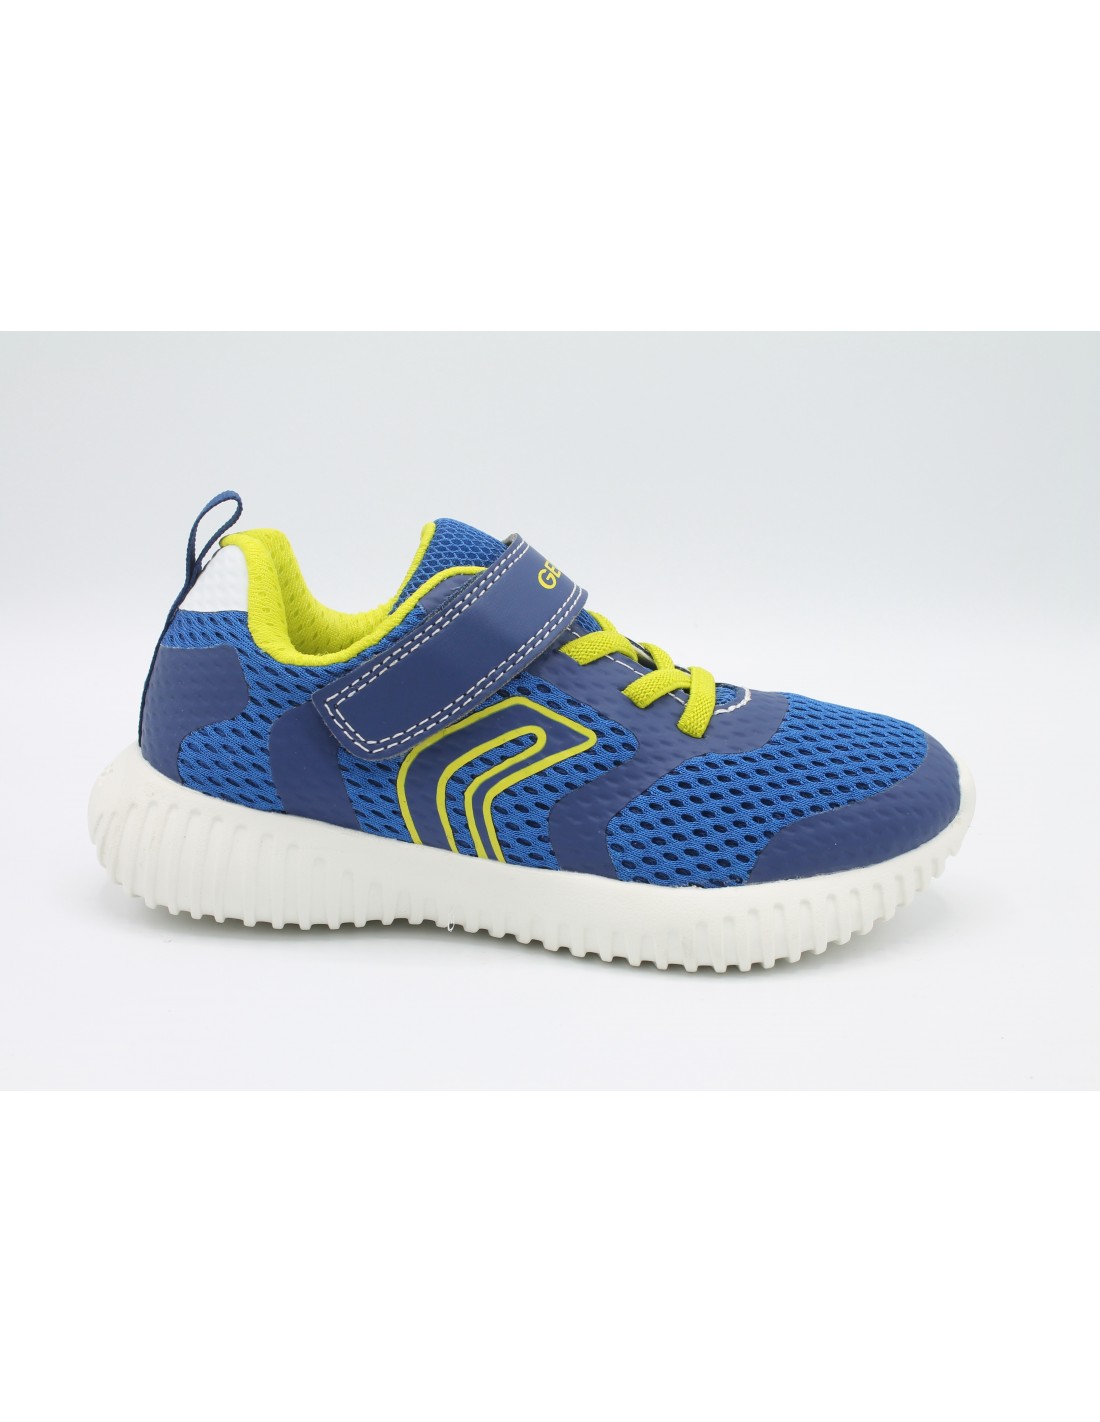 Geox scarpe per ragazzo in tela sneakers da ginnastica bambino estive  running 33 | eBay